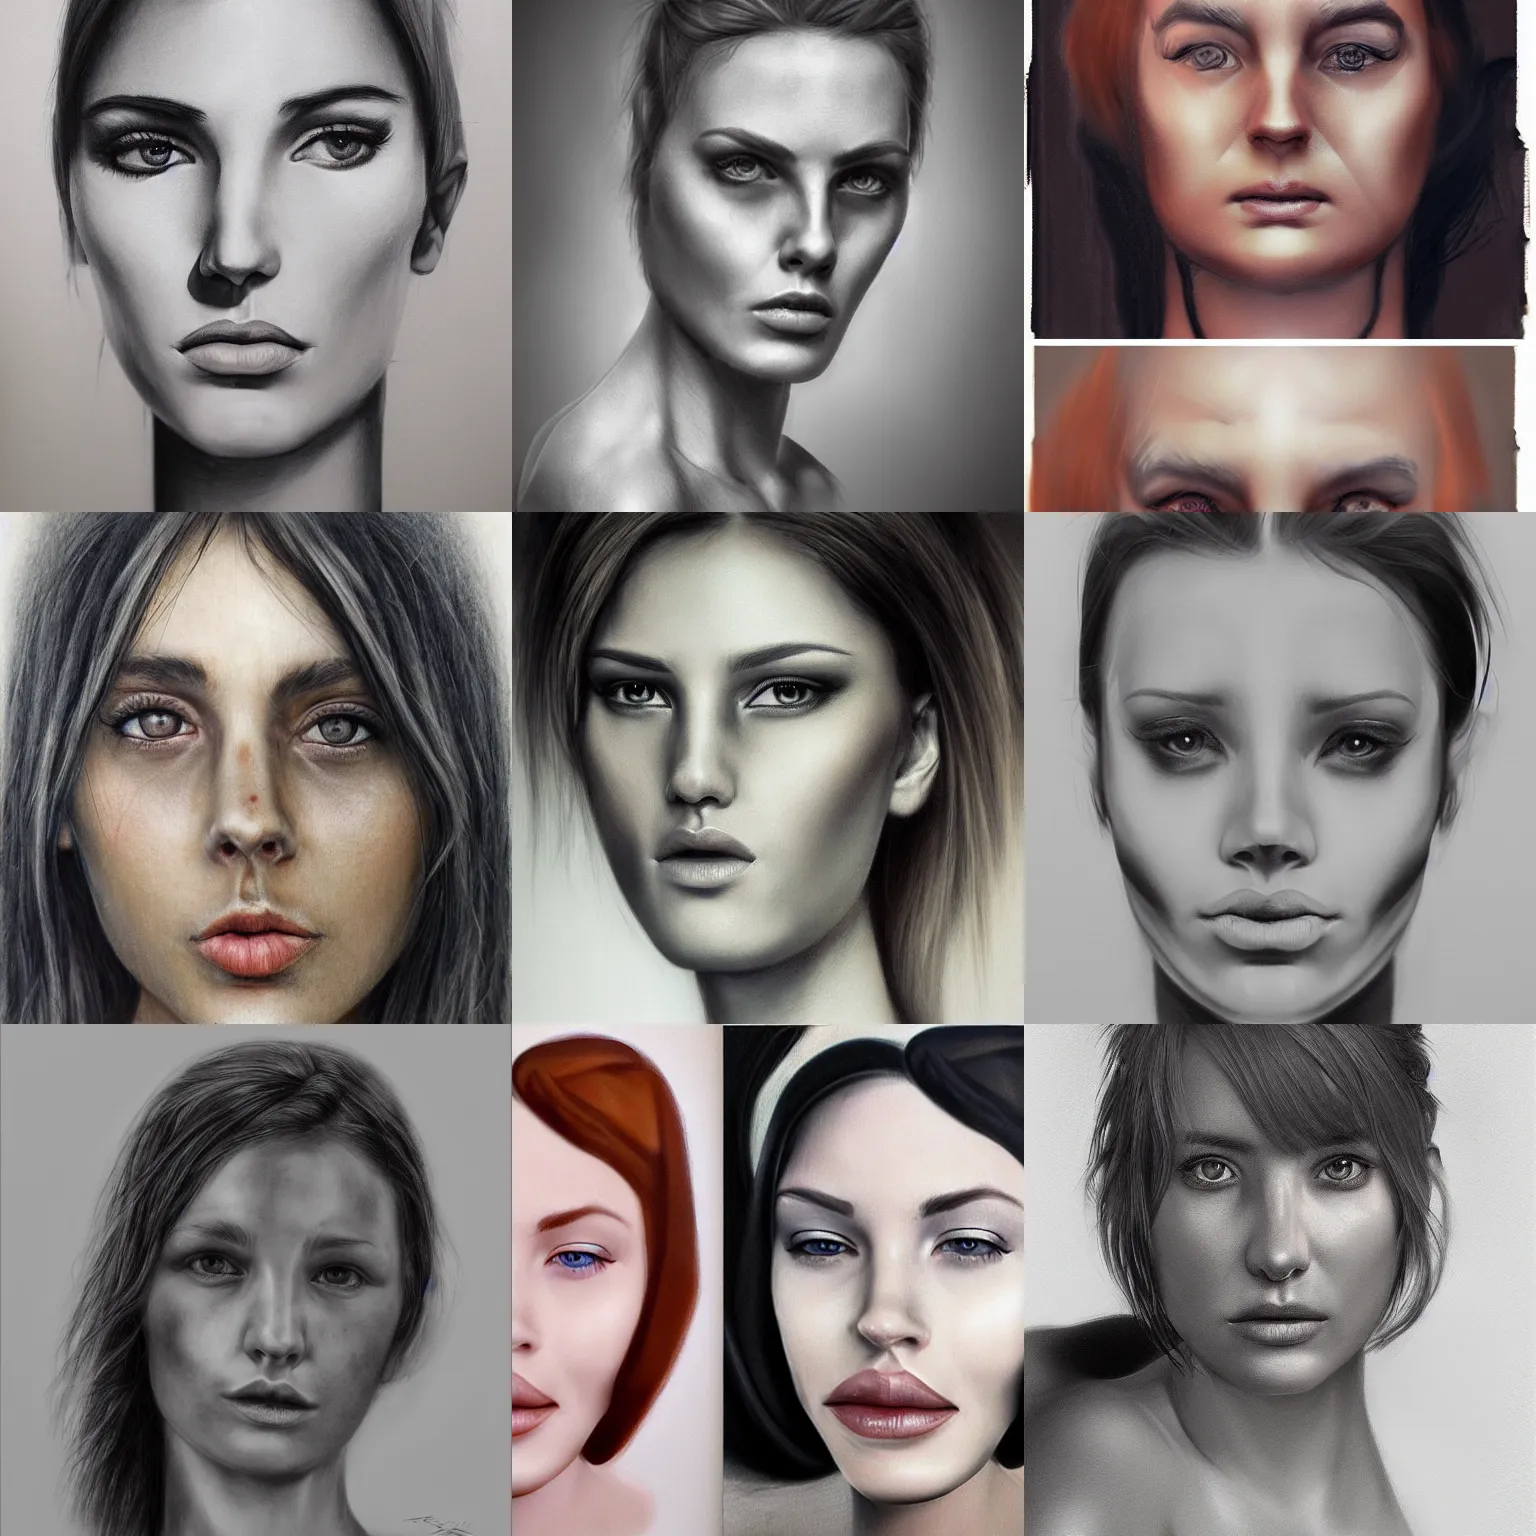 Prompt: realistic portrait design of a face by jordu schell